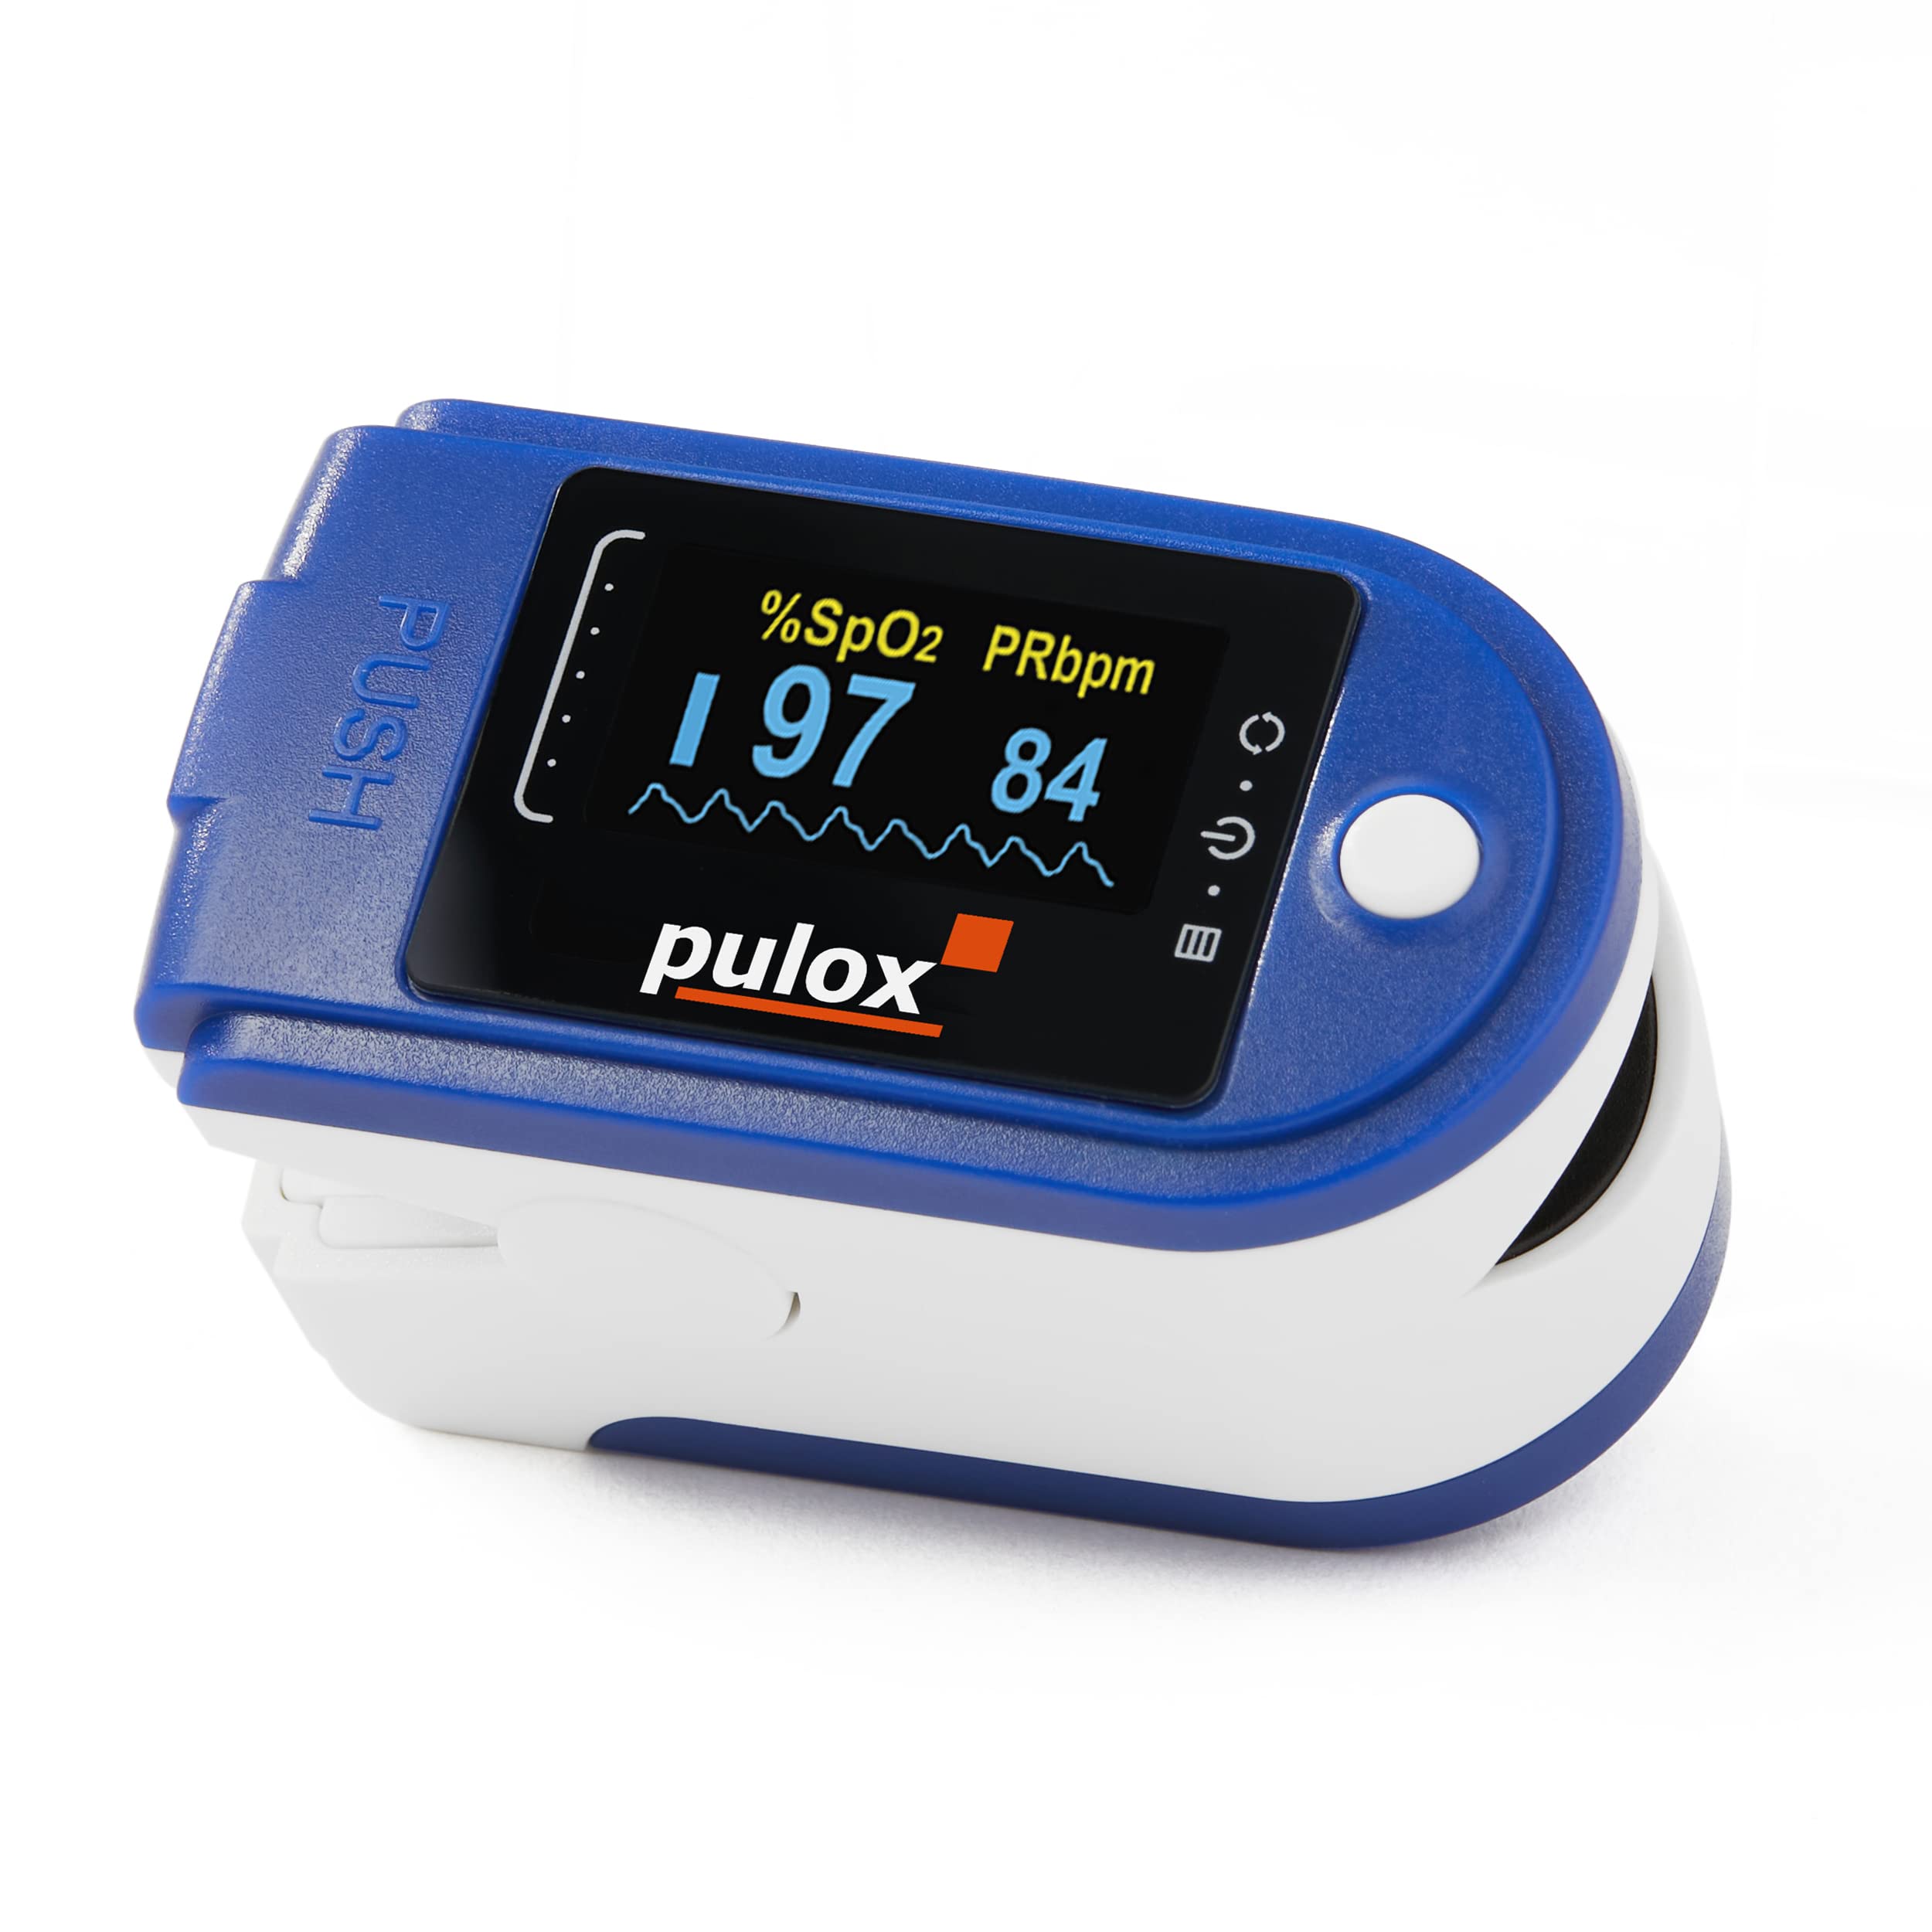 Pulsoximeter Pulox PO-250 mit LCD Farbdisplay, Alarmfunktion, Software und Zubehör